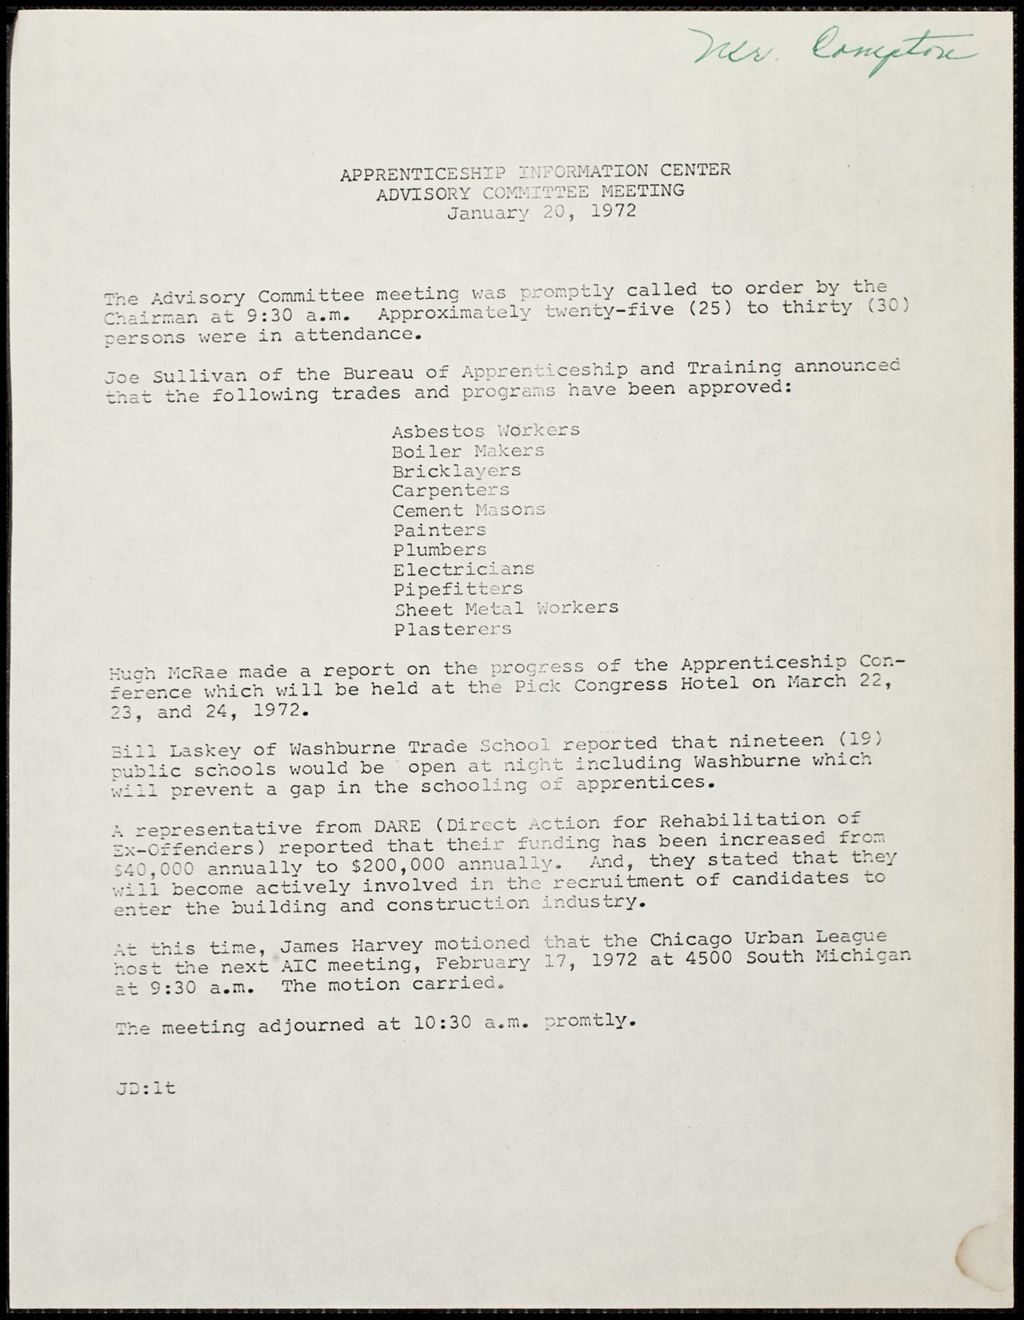 Miniature of Apprenticeship Advisory Committee minutes, 197-1972 (Folder I-3021)